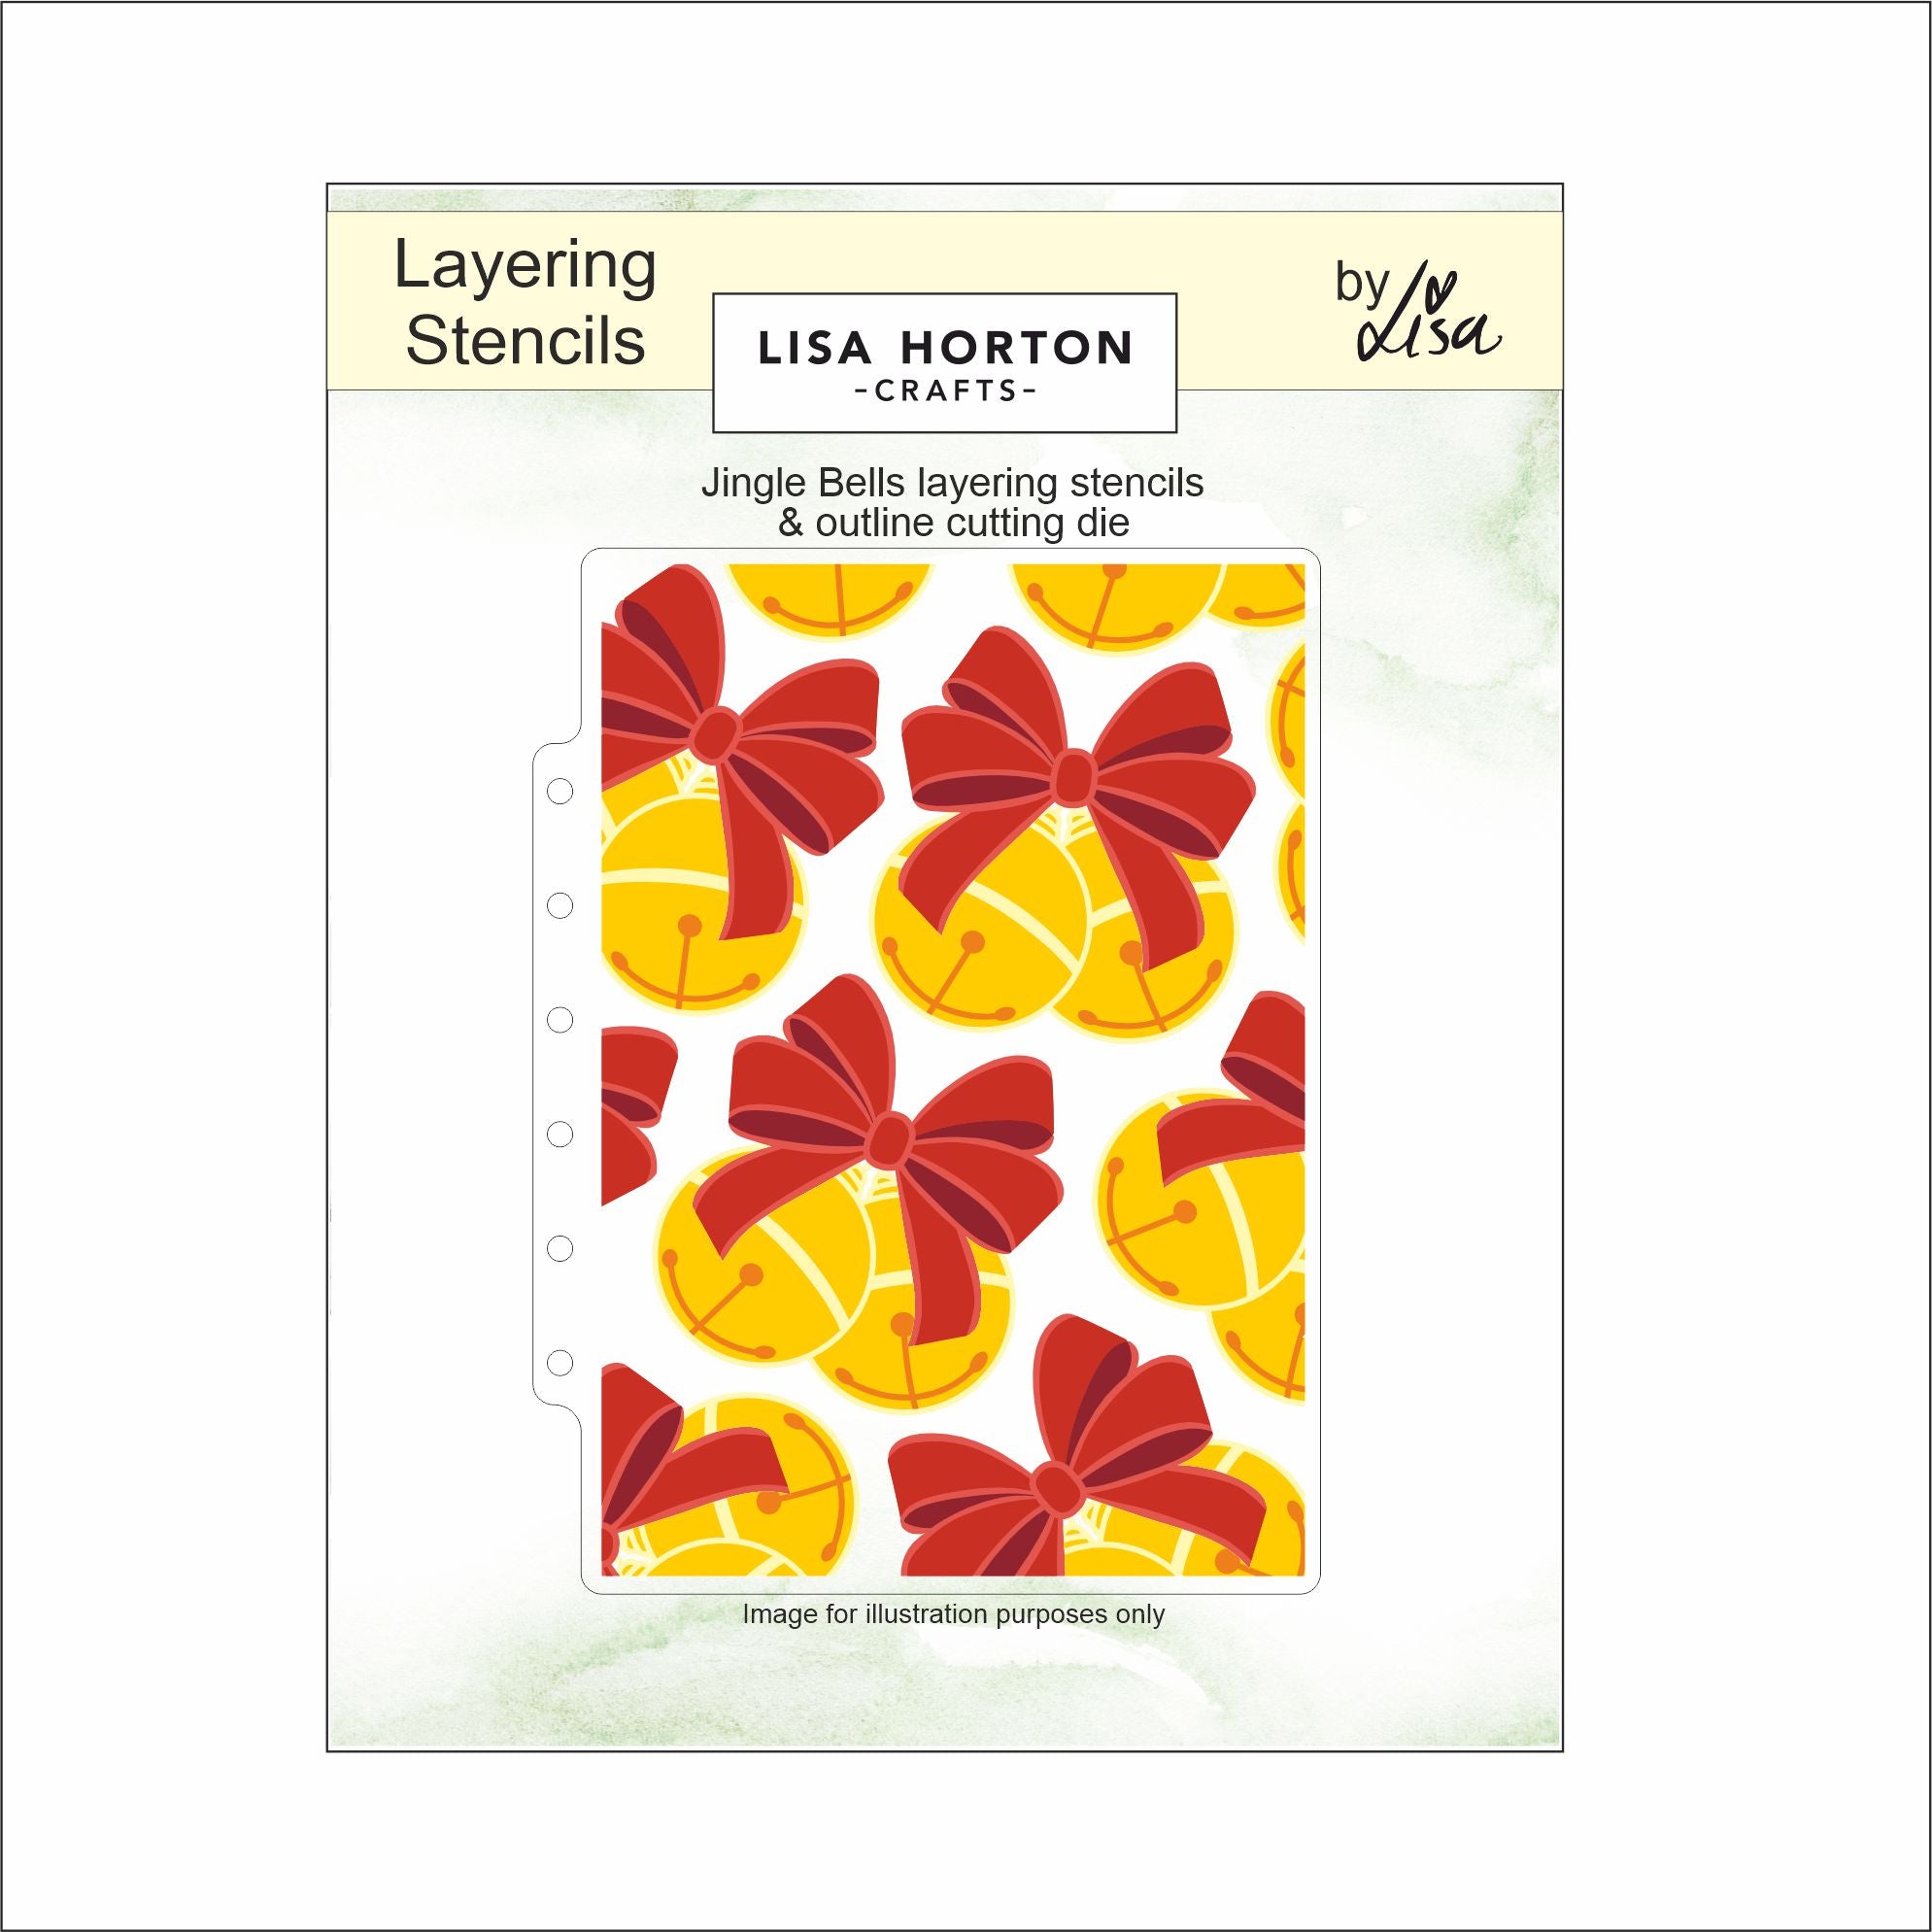 Lisa Horton Crafts Jingle Bells 5" x 7" Layering Stencils & Die